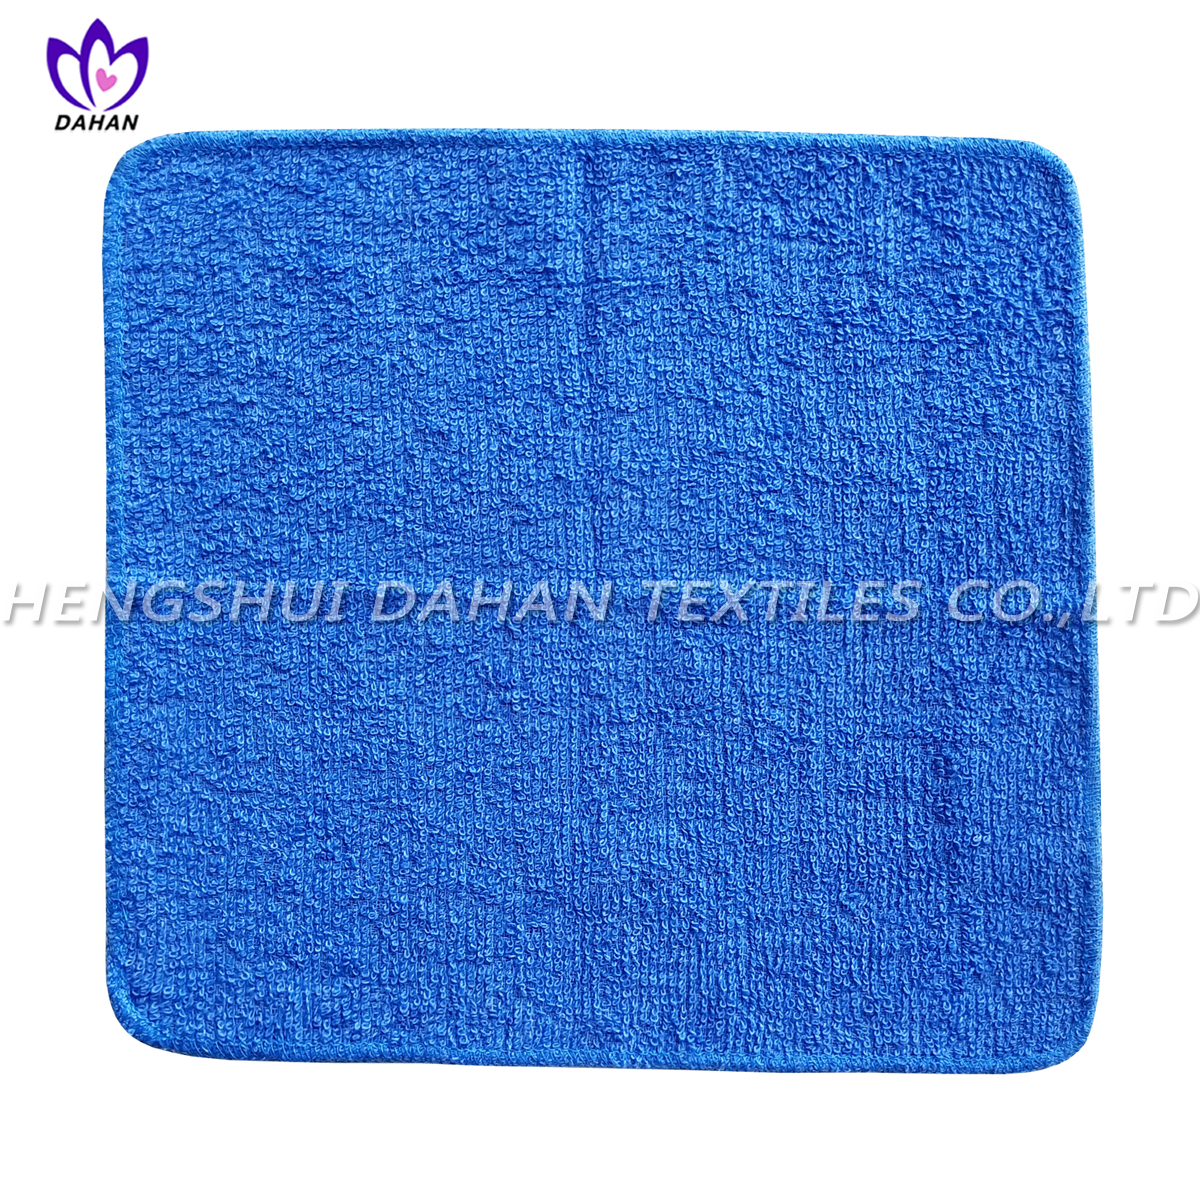 424BH 100%cotton solid color wash cloths, kitchen towel,3-pack.